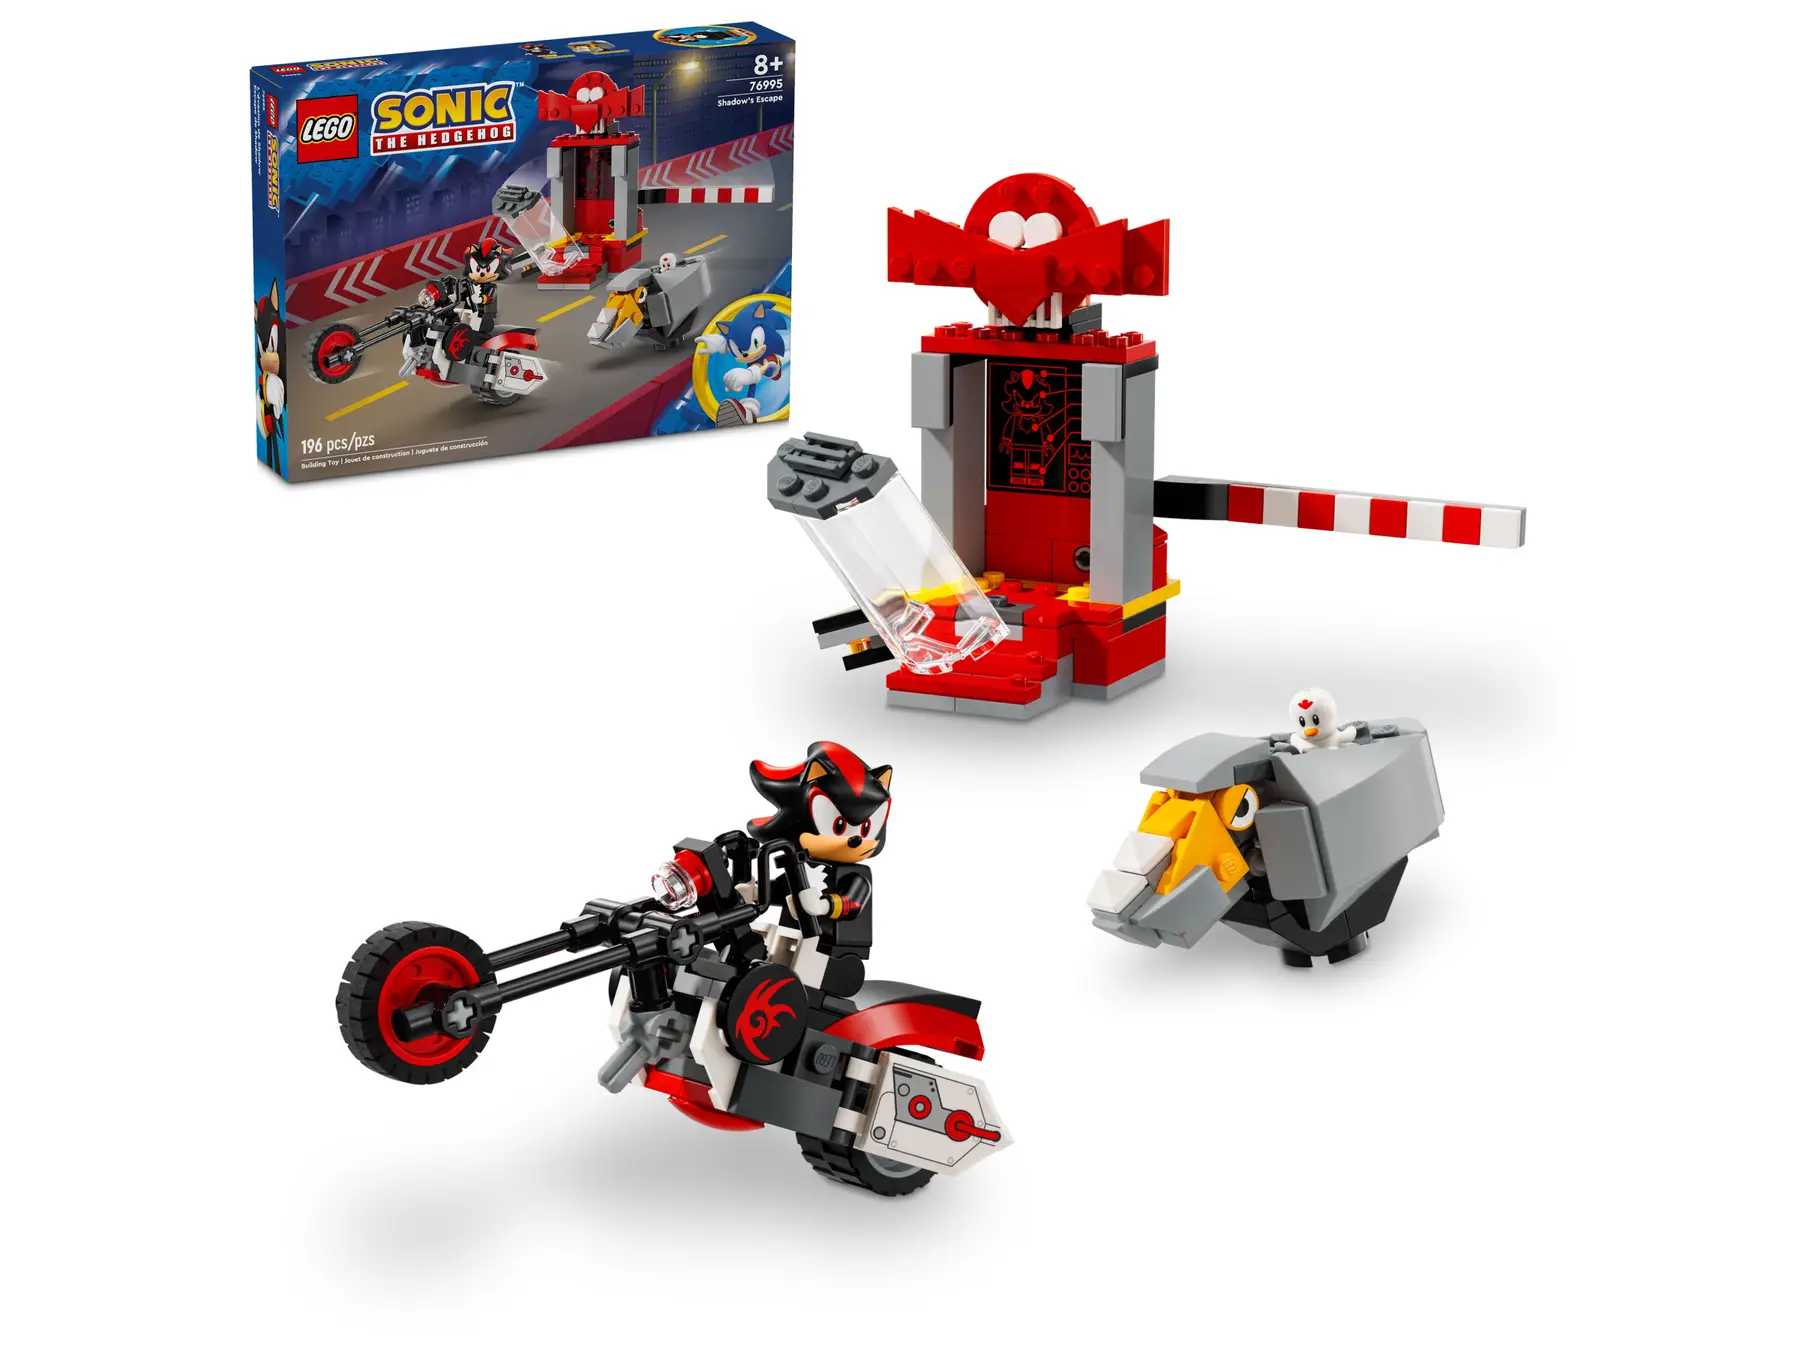 LEGO Shadow the Hedgehog Escape Set Releasing on December 1st